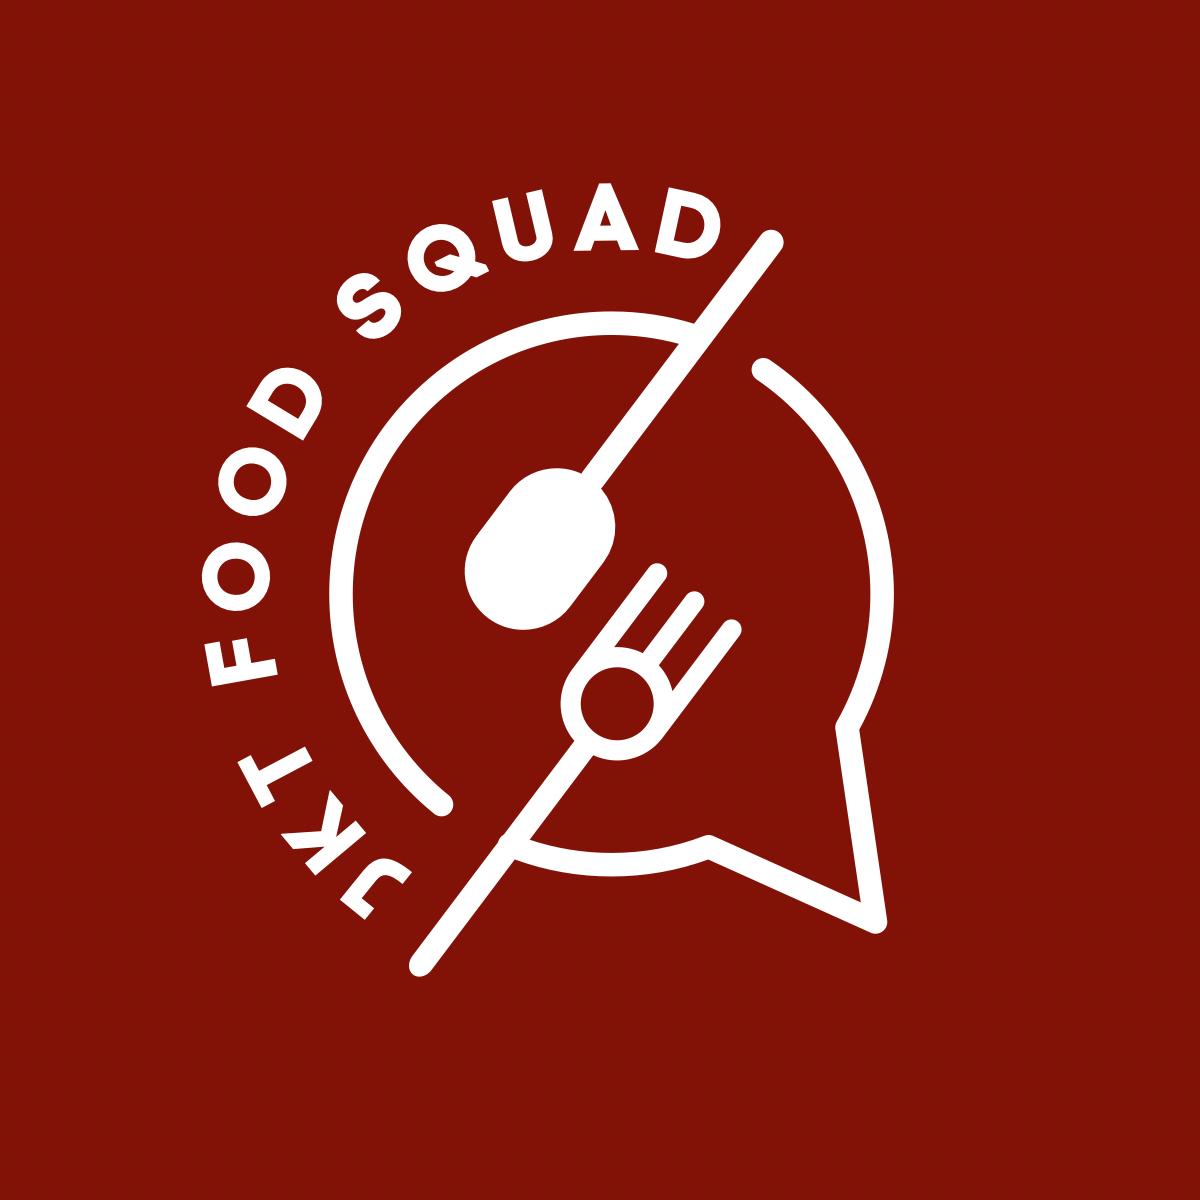 JKT Food Squad